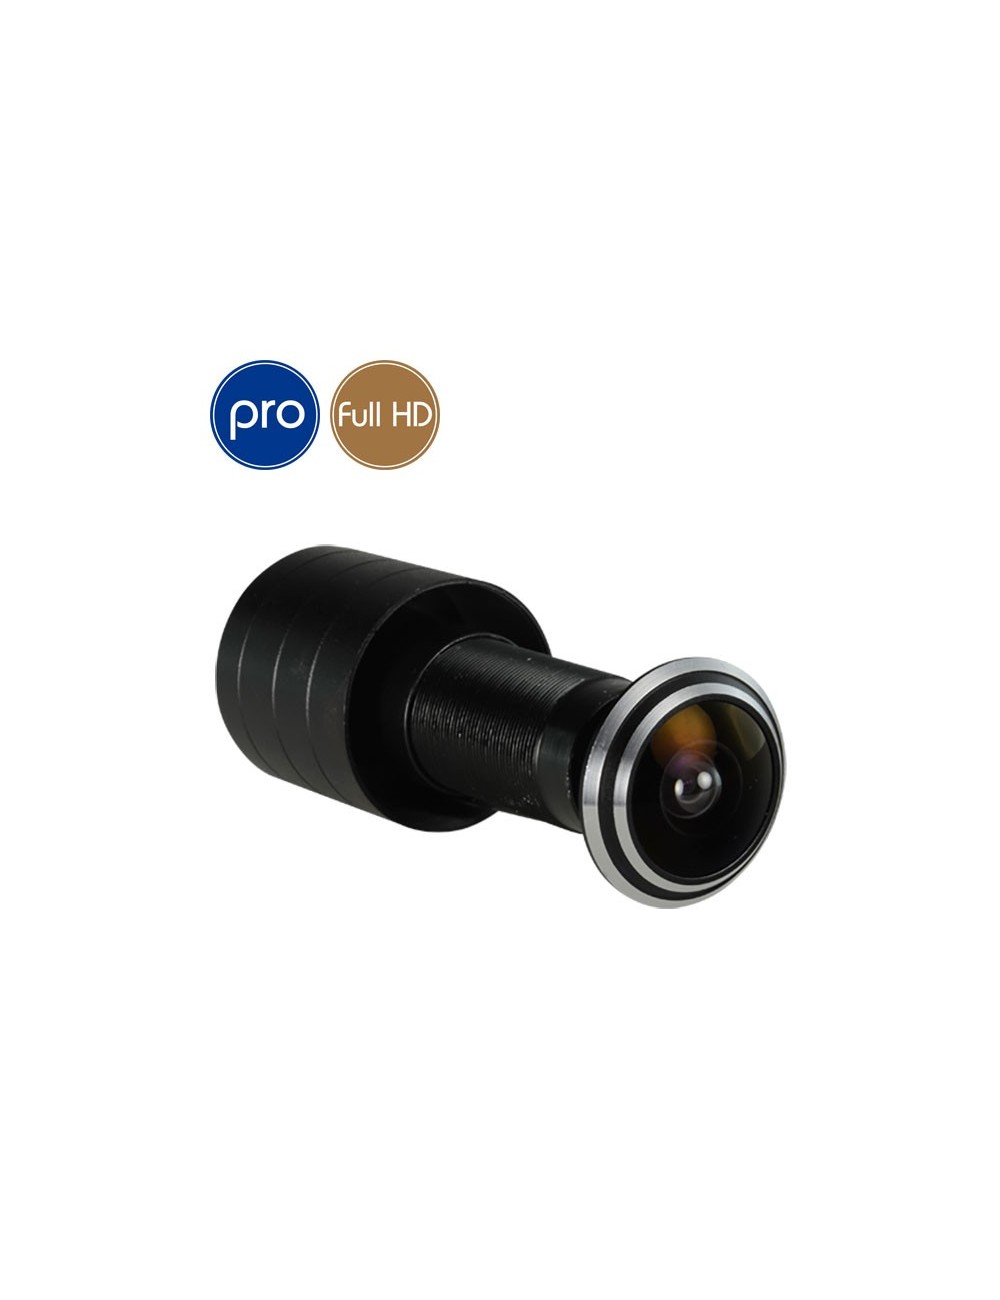 AHD microcamera PRO - 1080p SONY - 2 Megapixel - peephole